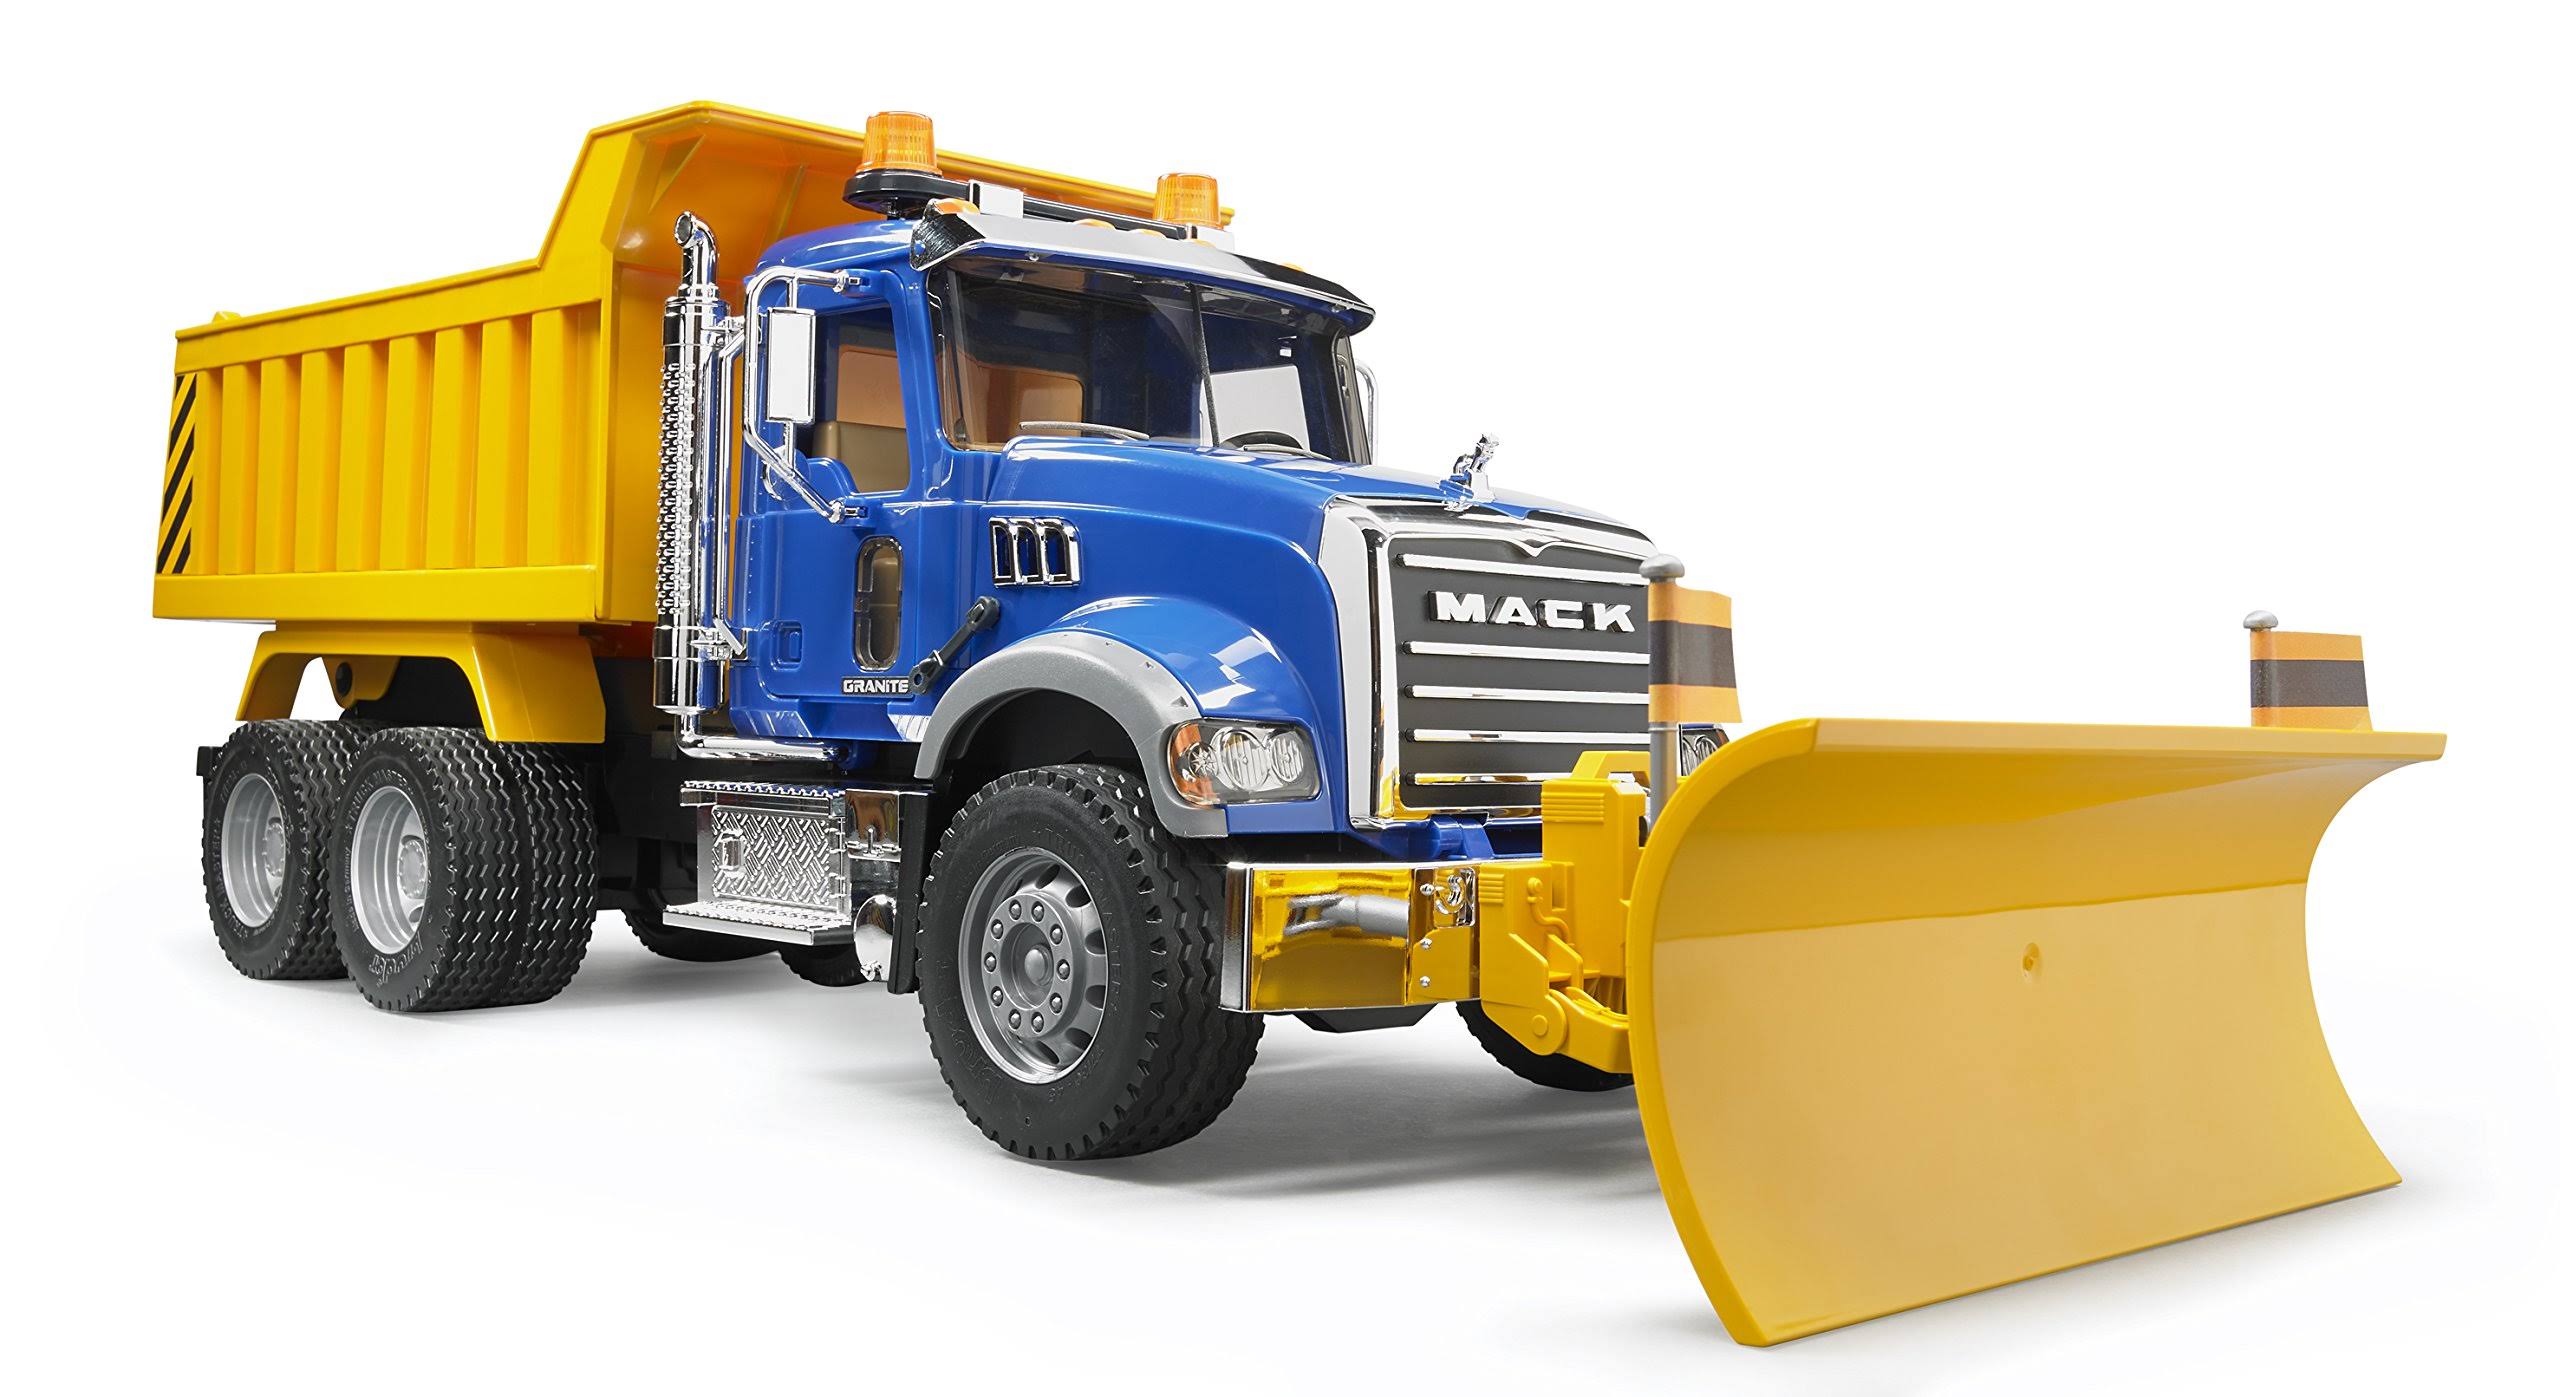 Bruder Mack Granite Dump Truck Construction Toy